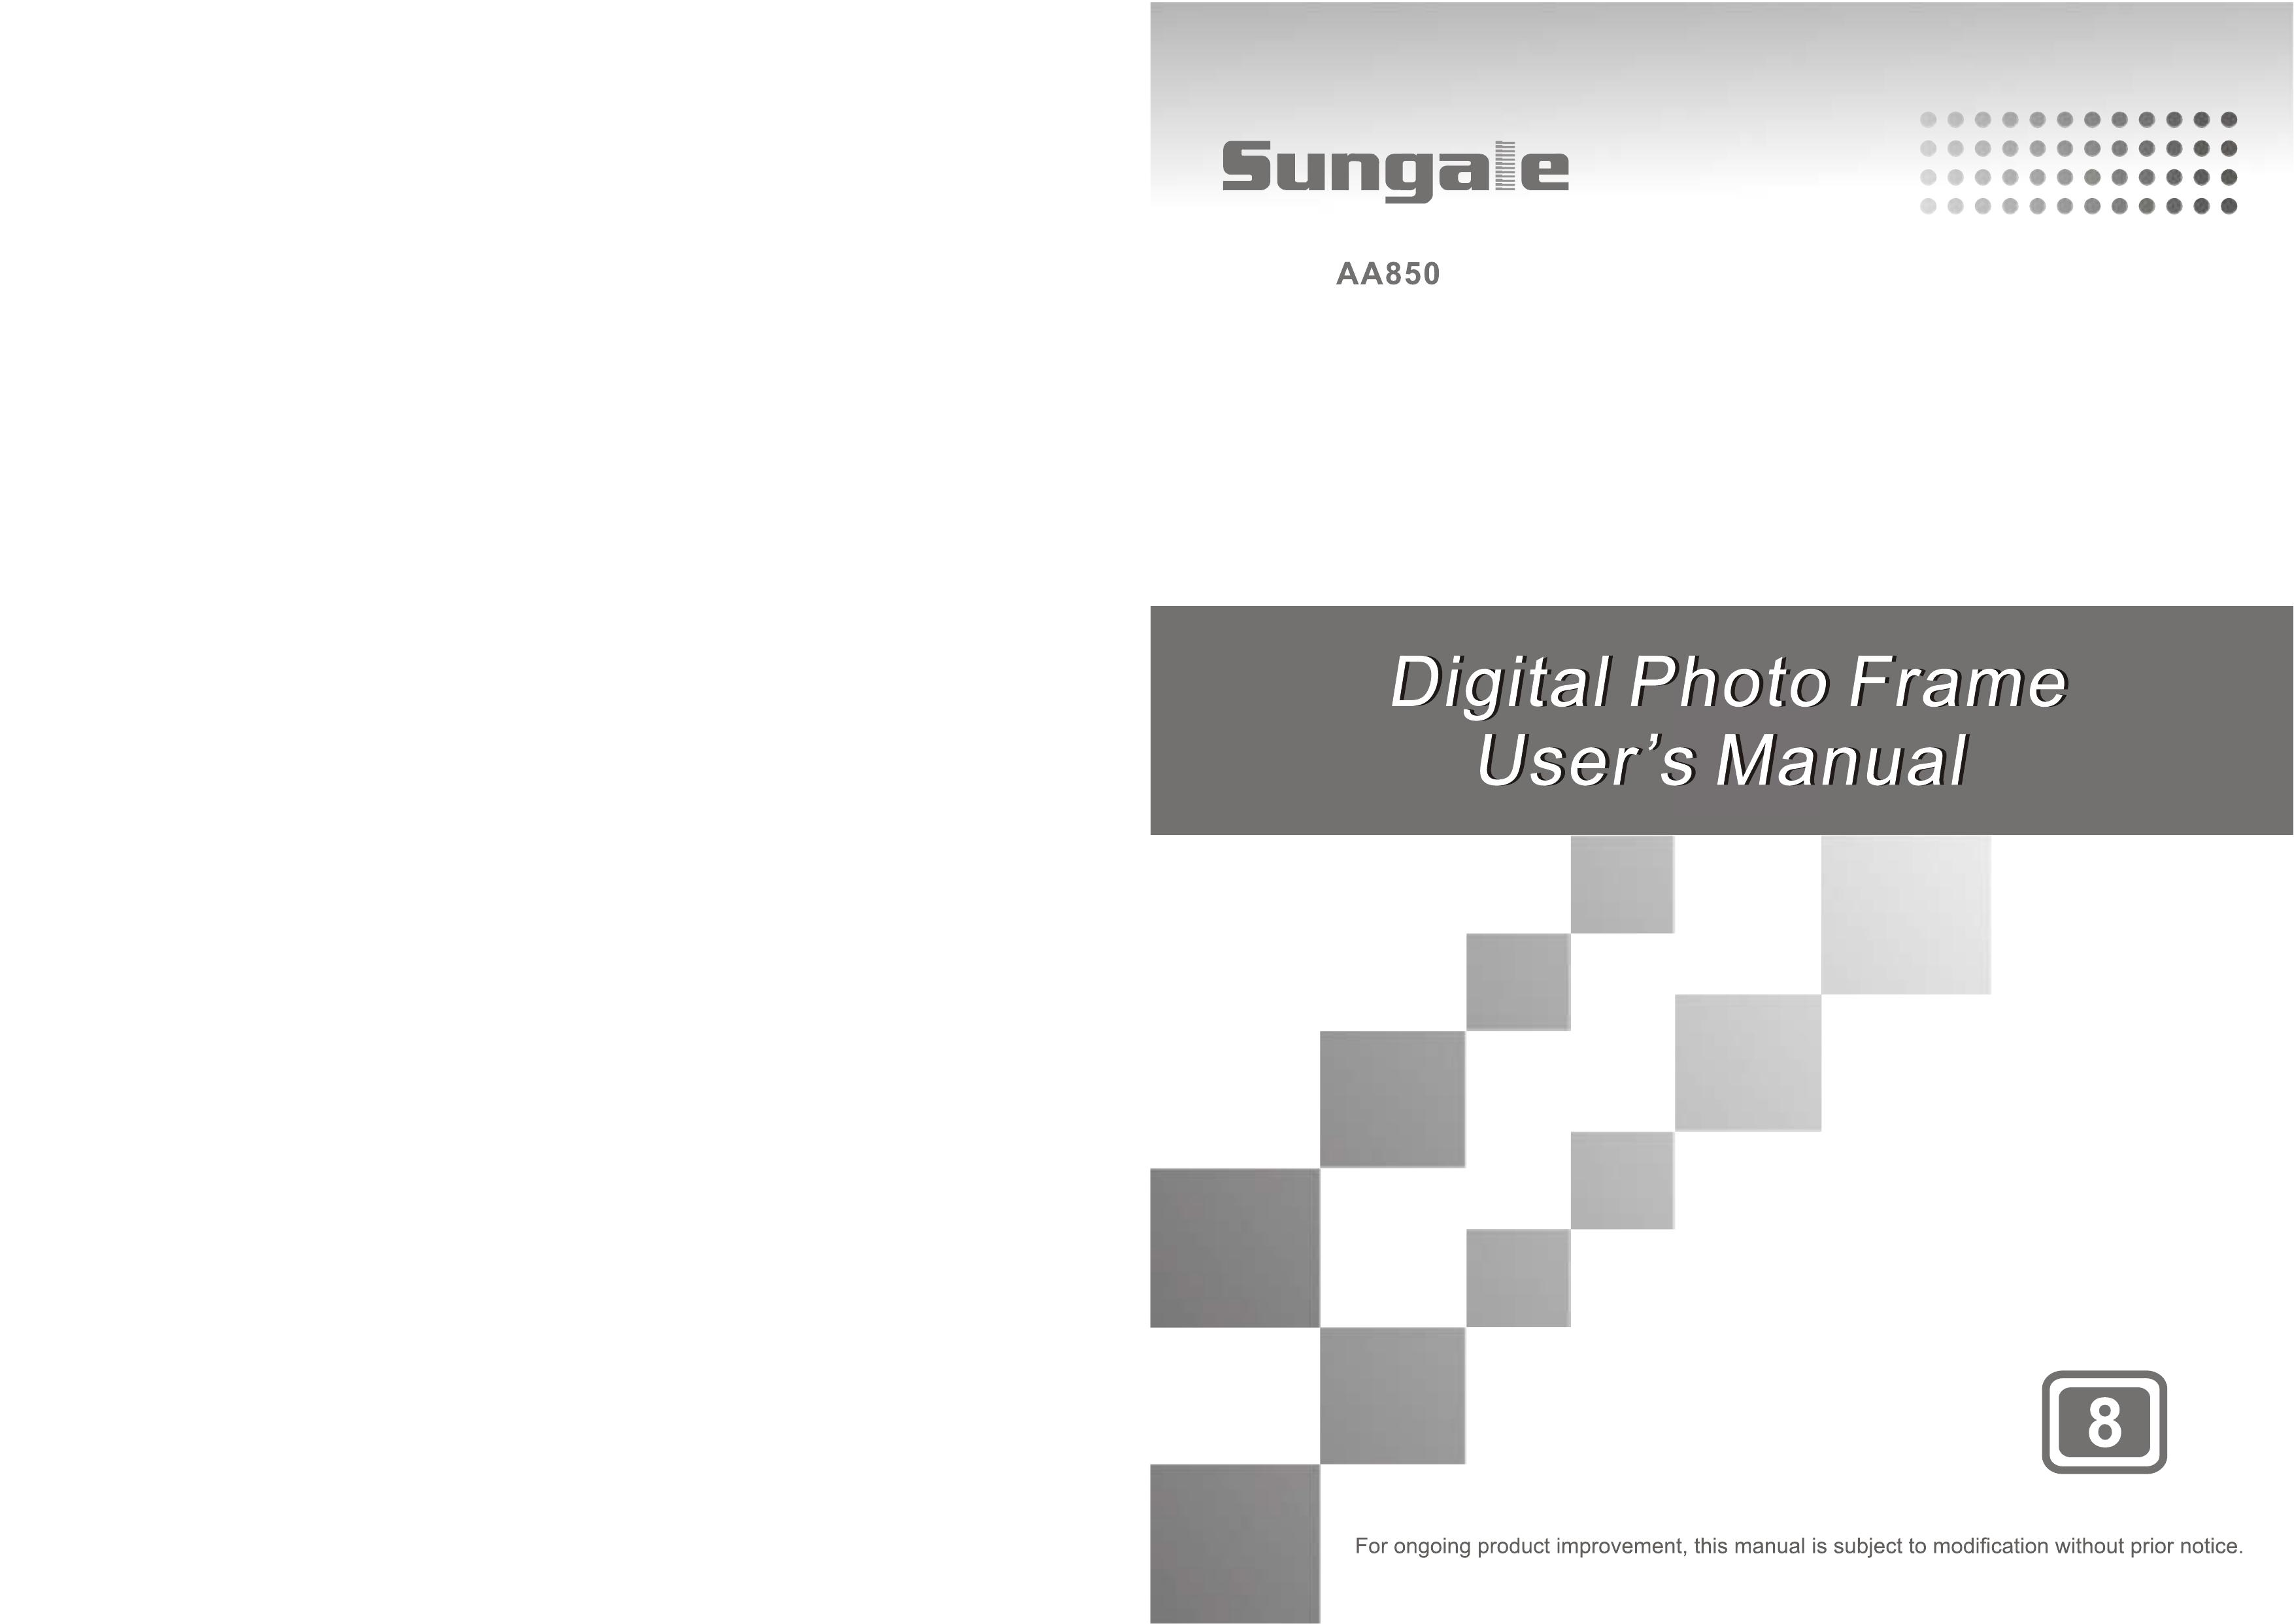 Sungale AA850 Digital Photo Frame User Manual